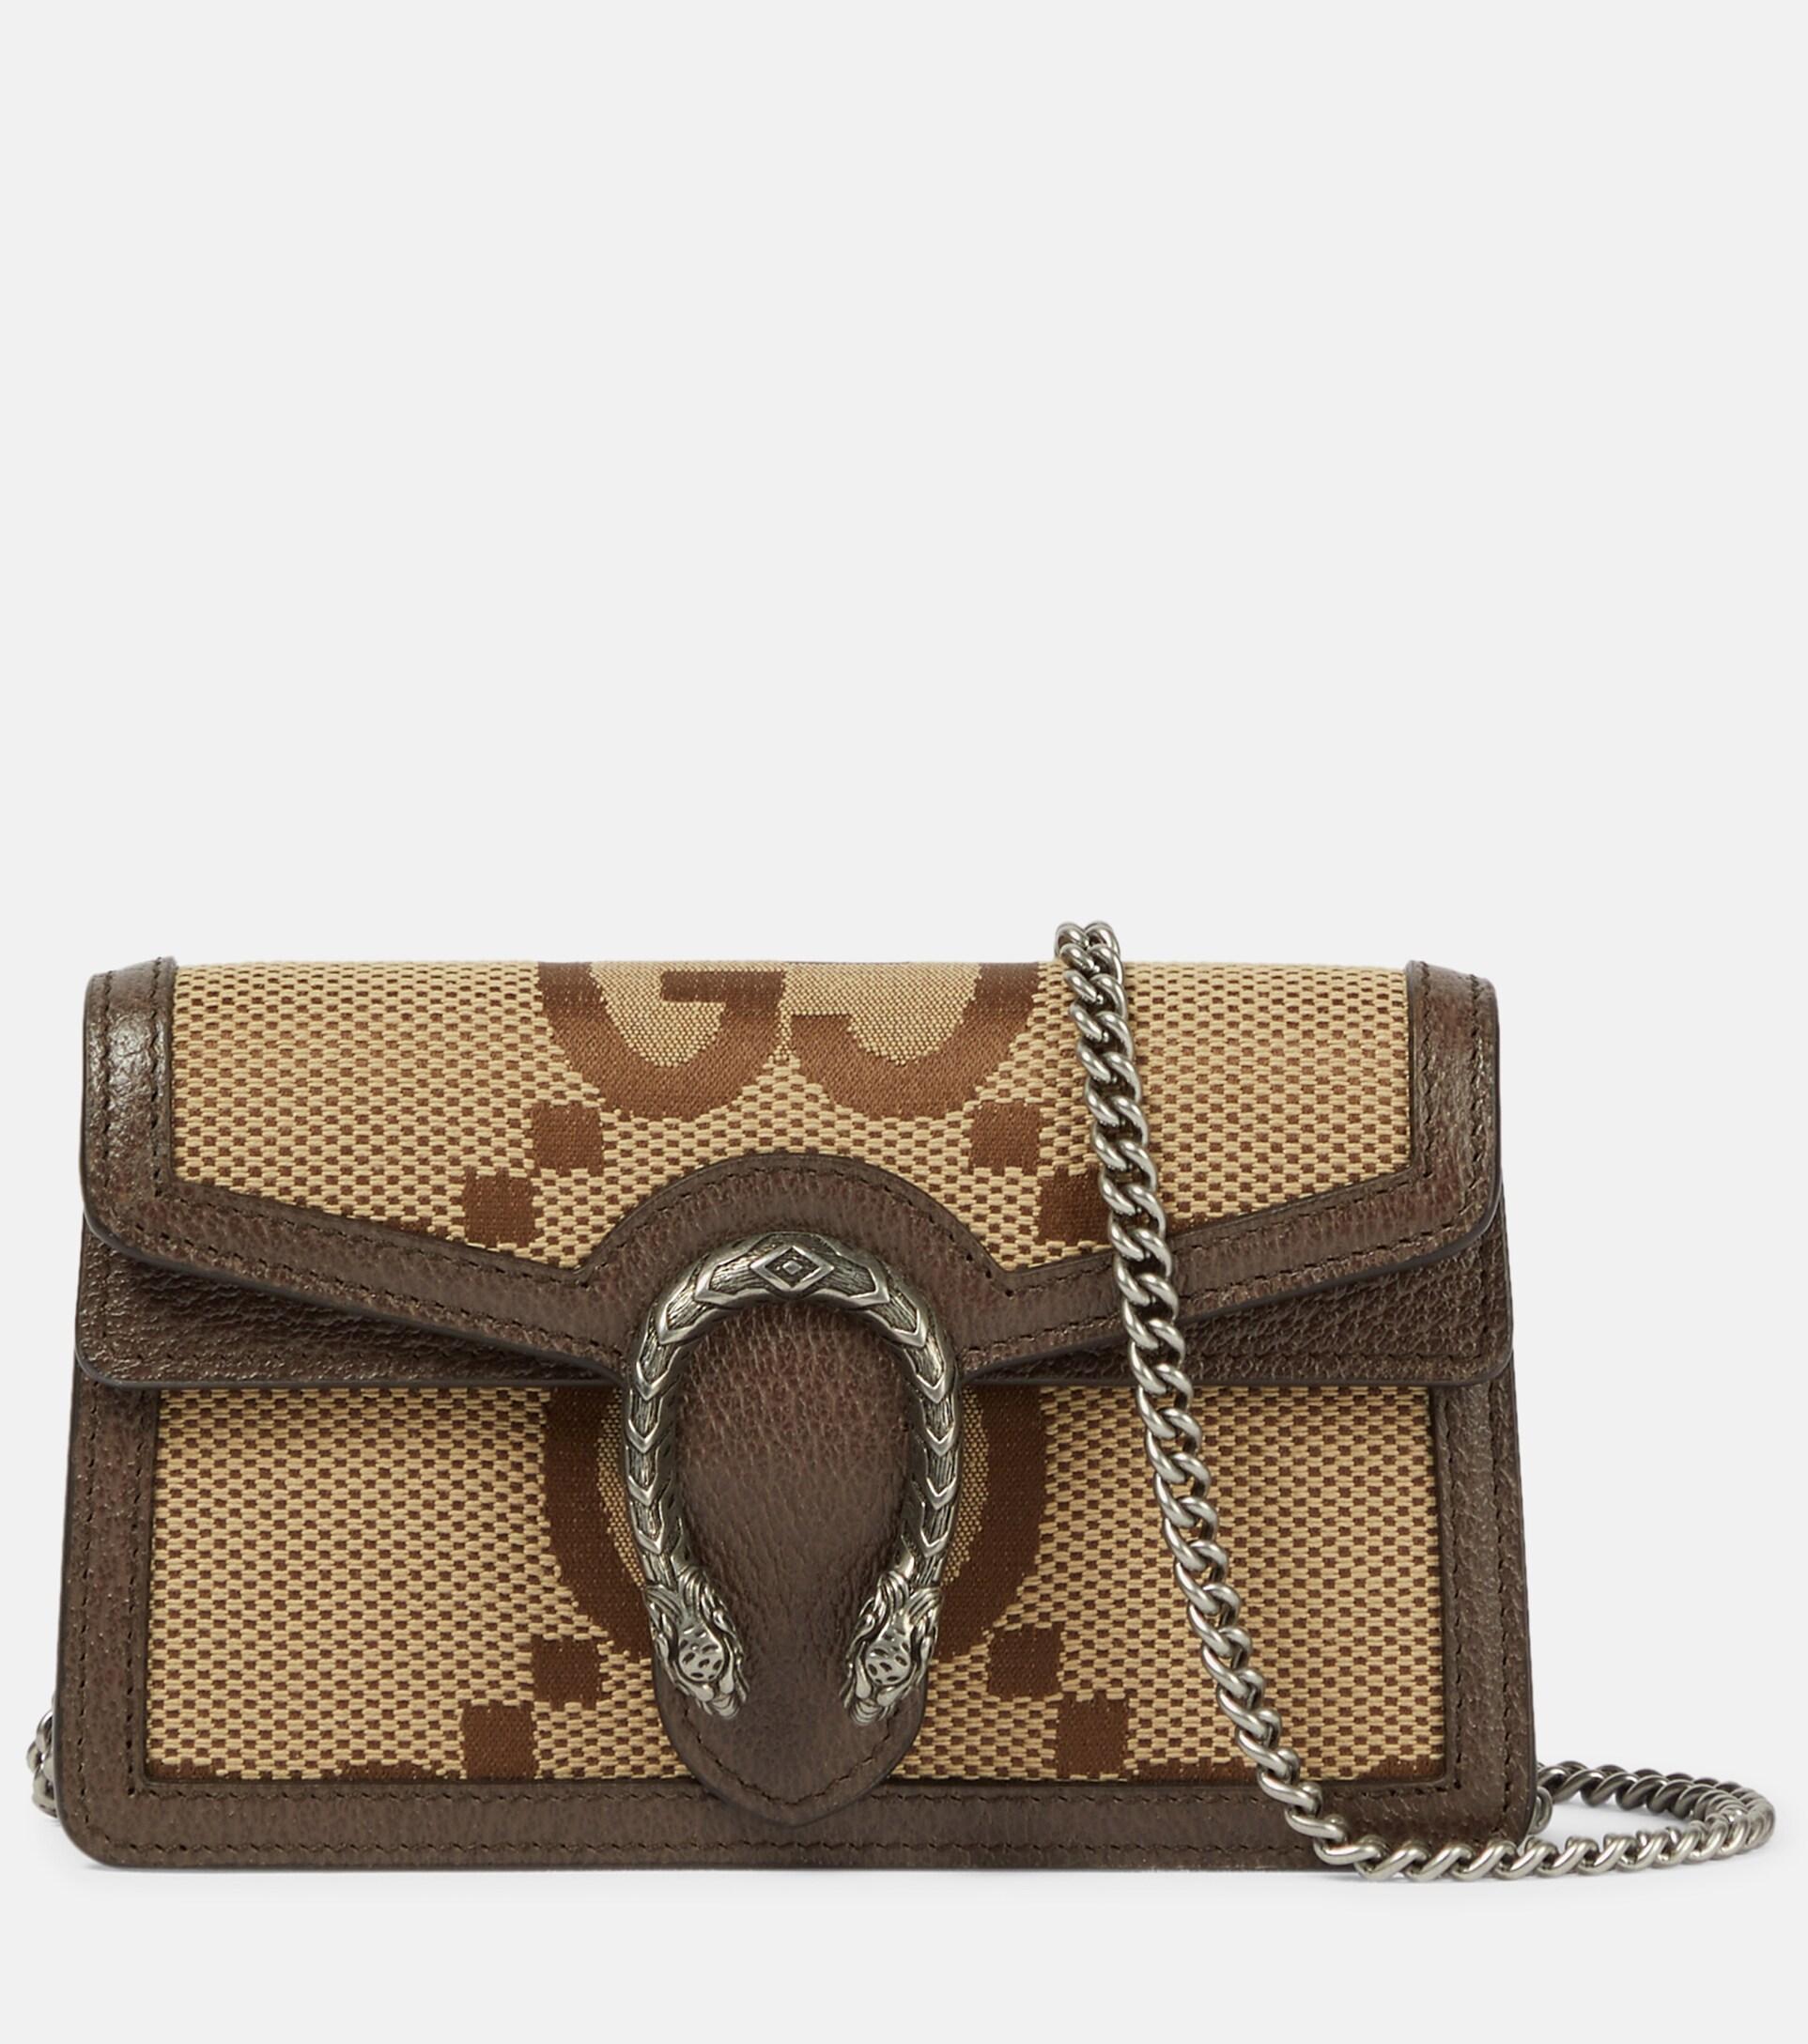 Gucci Dionysus GG Supreme Mini Shoulder Bag in Brown | Lyst